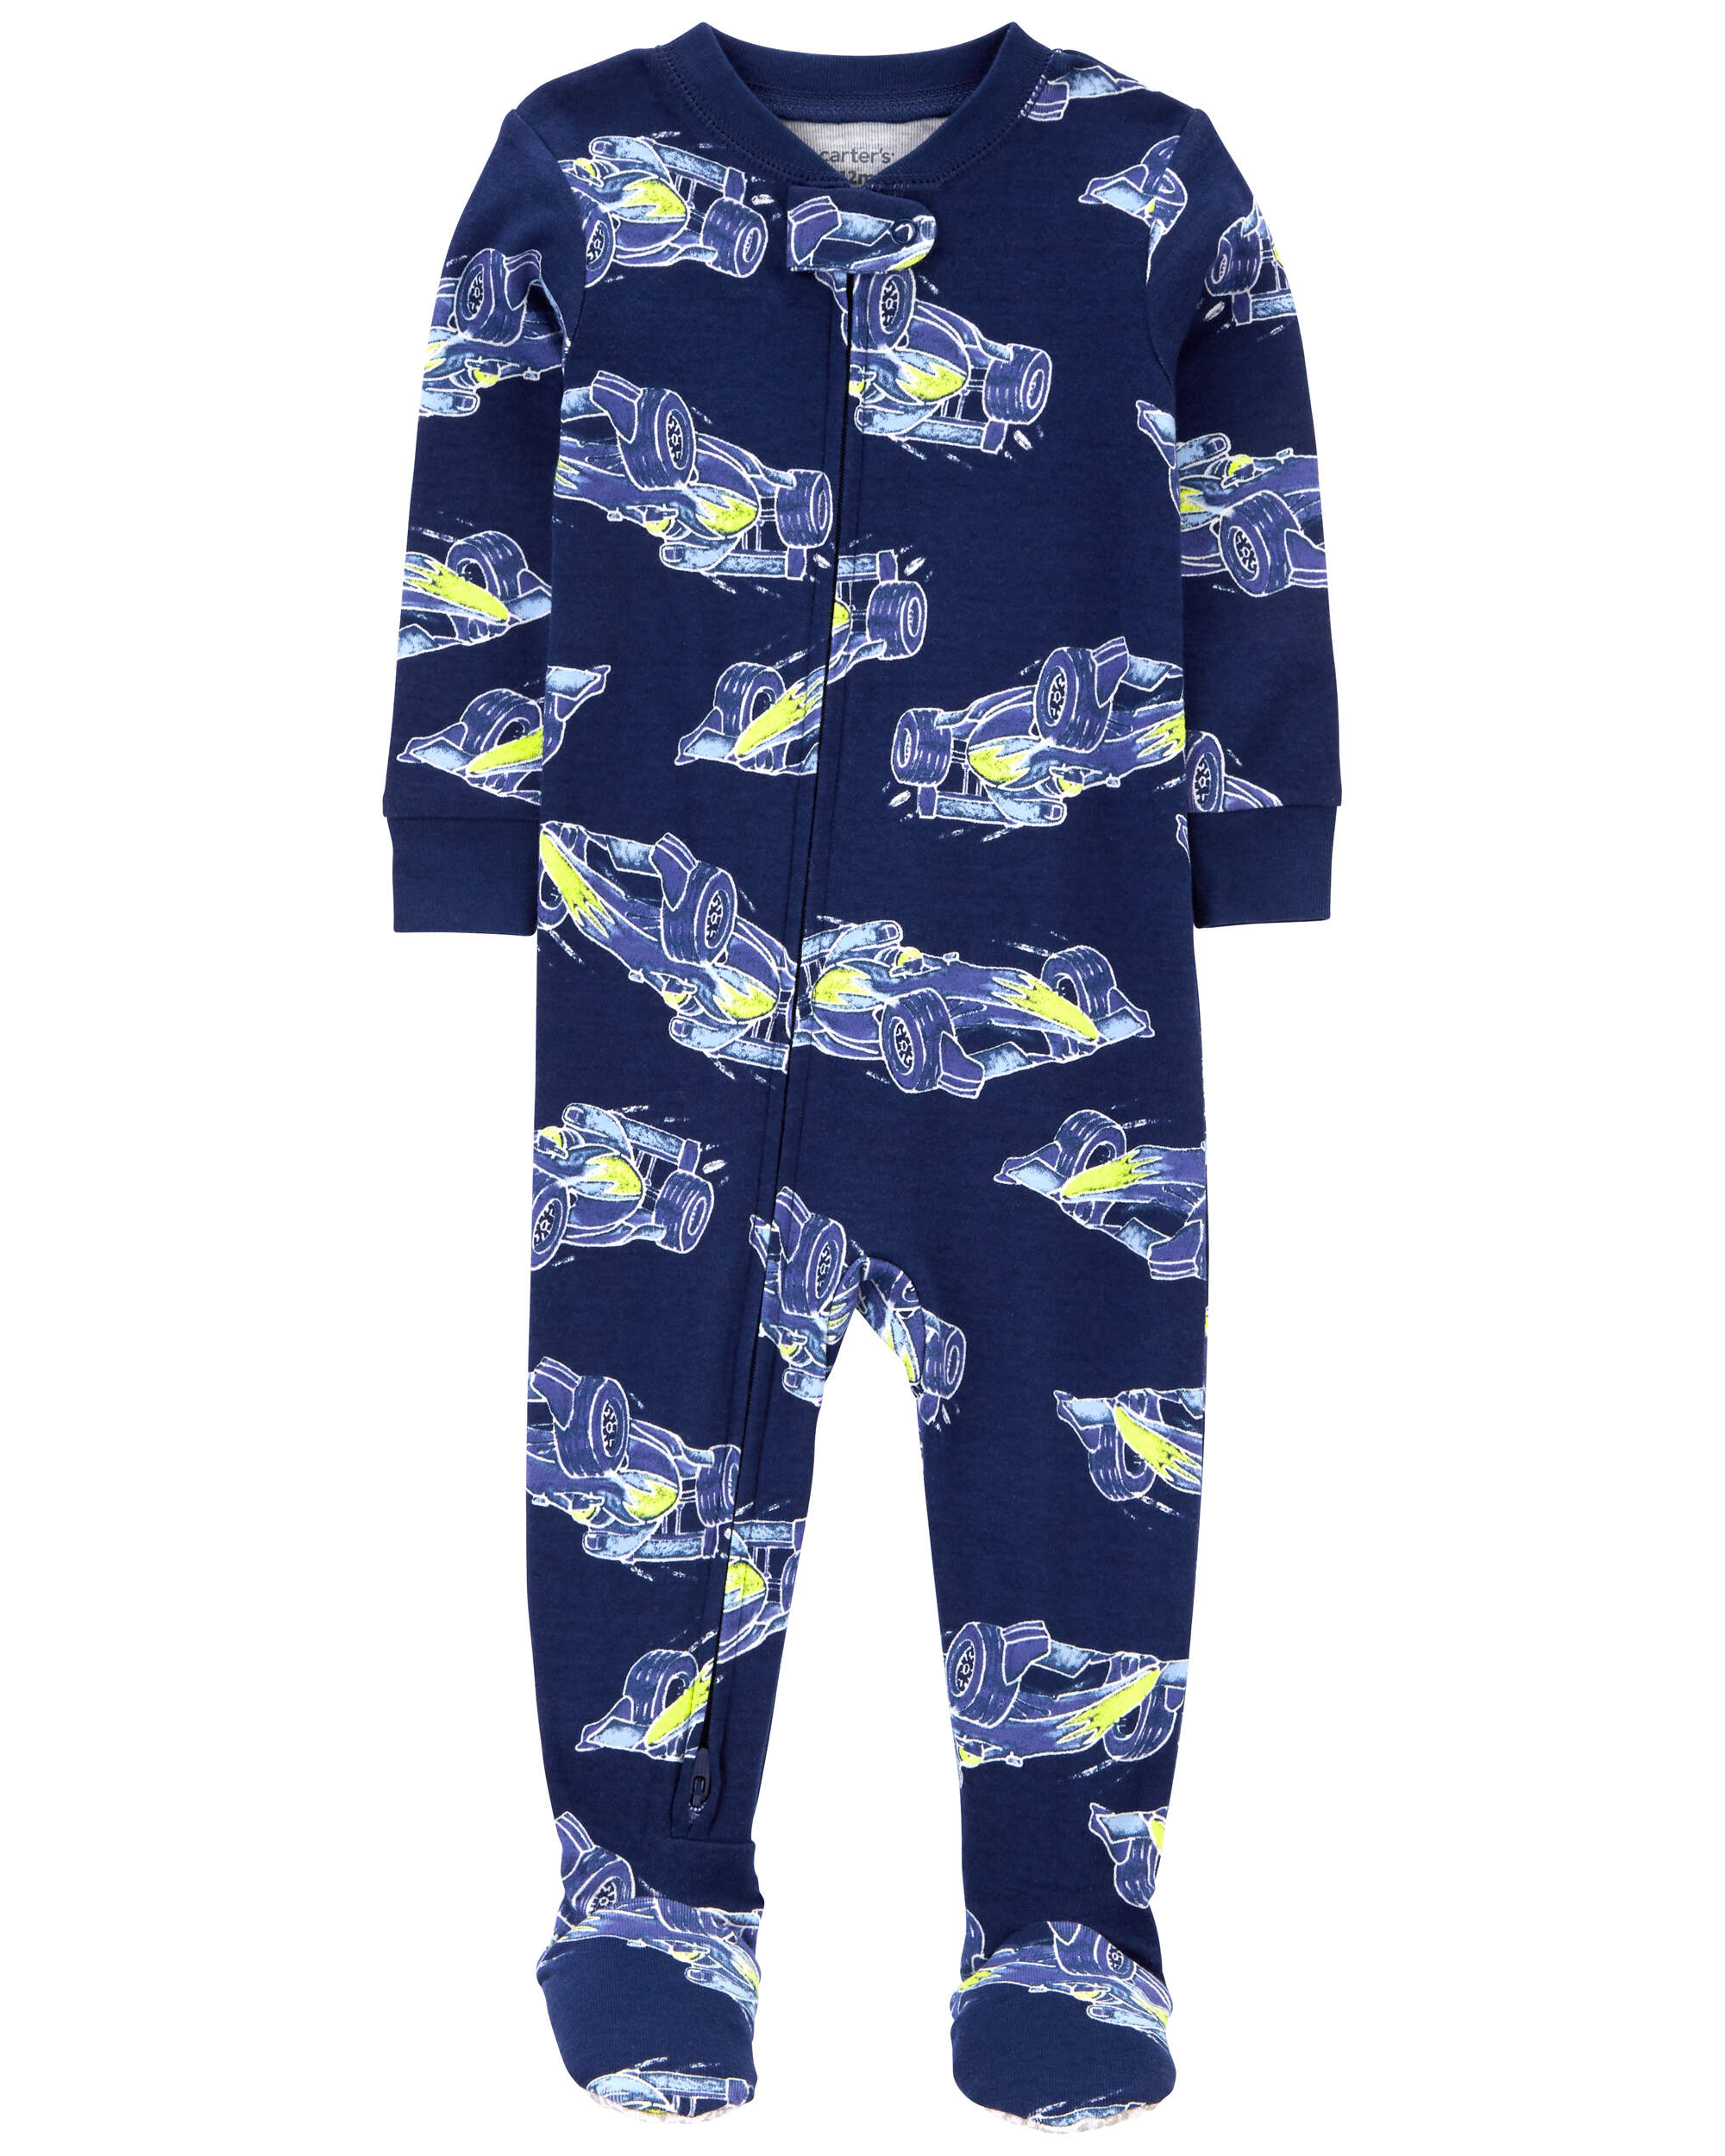 Toddler 1-Piece Race Car 100% Snug Fit Cotton Footie Pyjamas